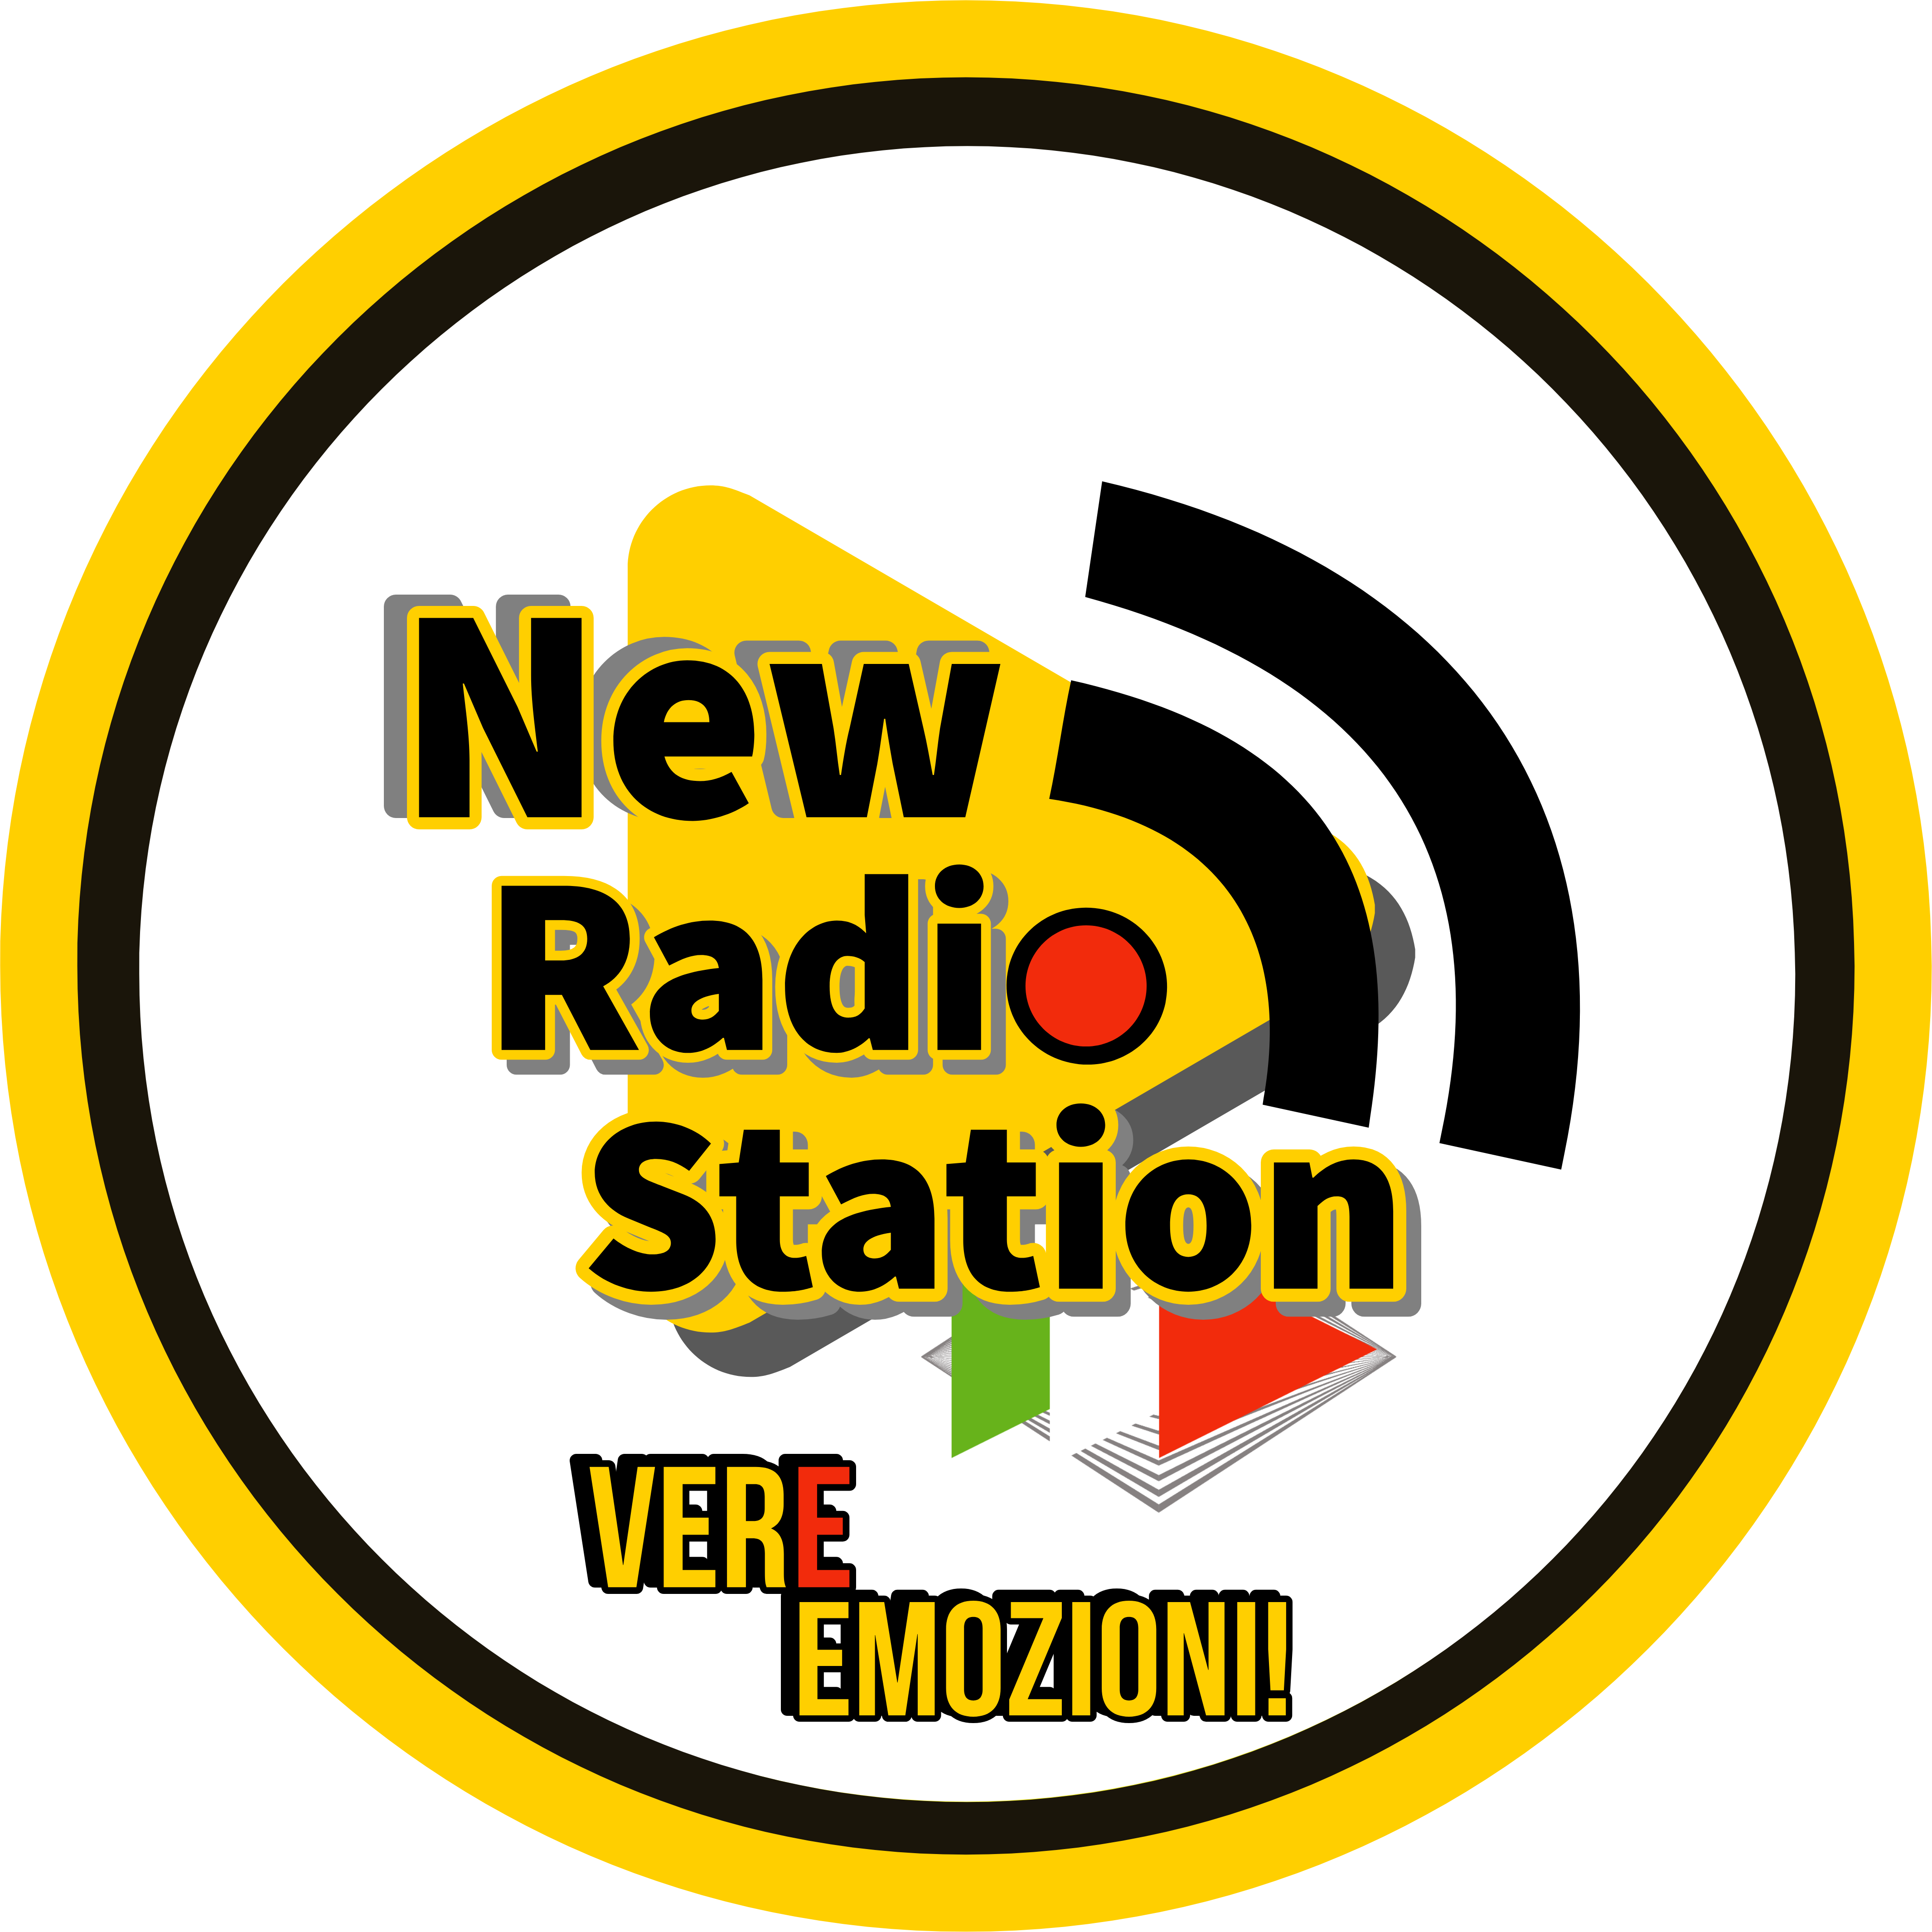 NEW RADIO STATION